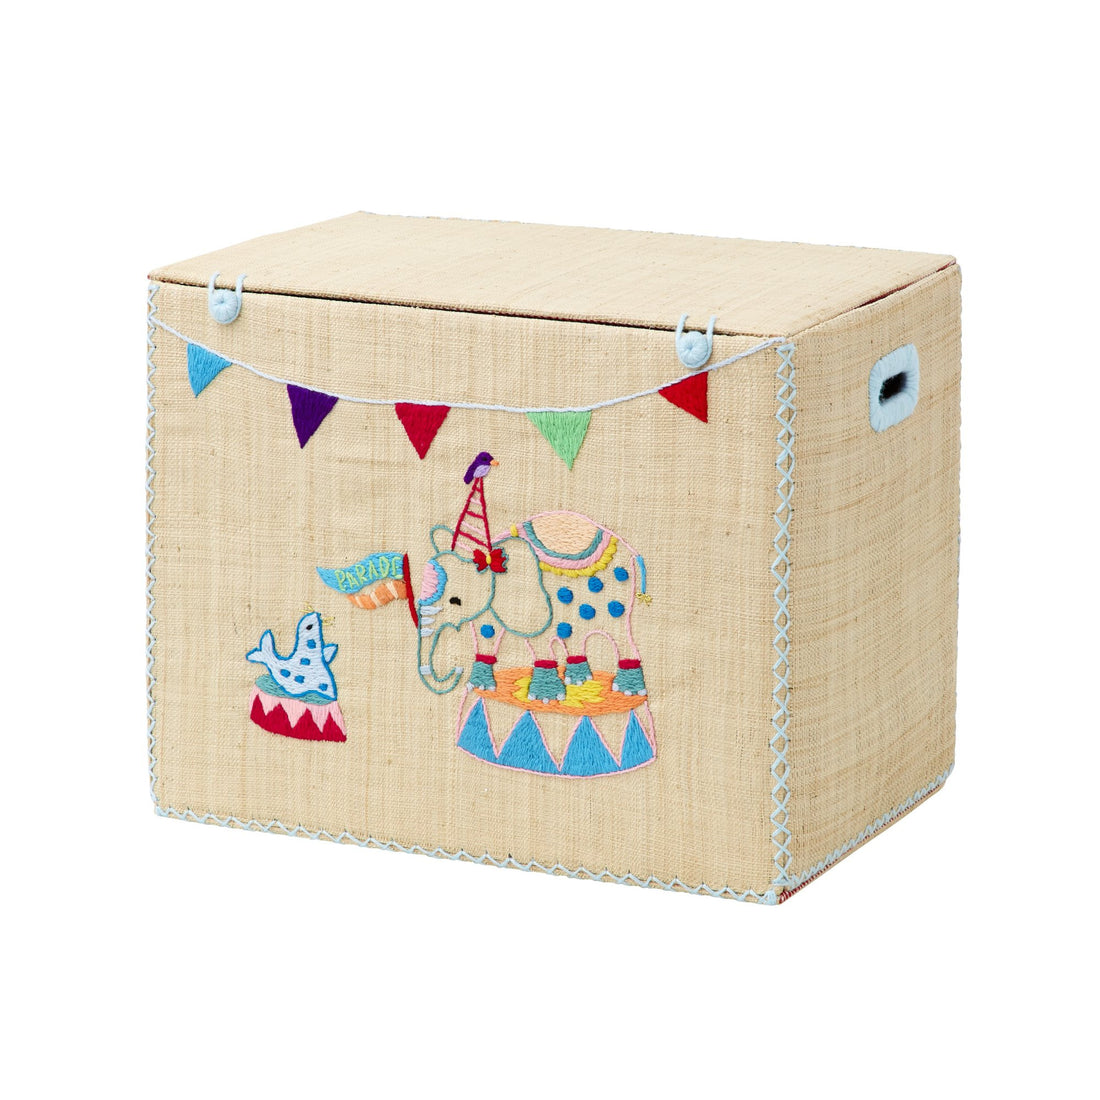 rice-dk-elepahnt-and-sea-lion-medium-foldable-basket-in-circus-design-decor-storage-bshou-mcirc-01